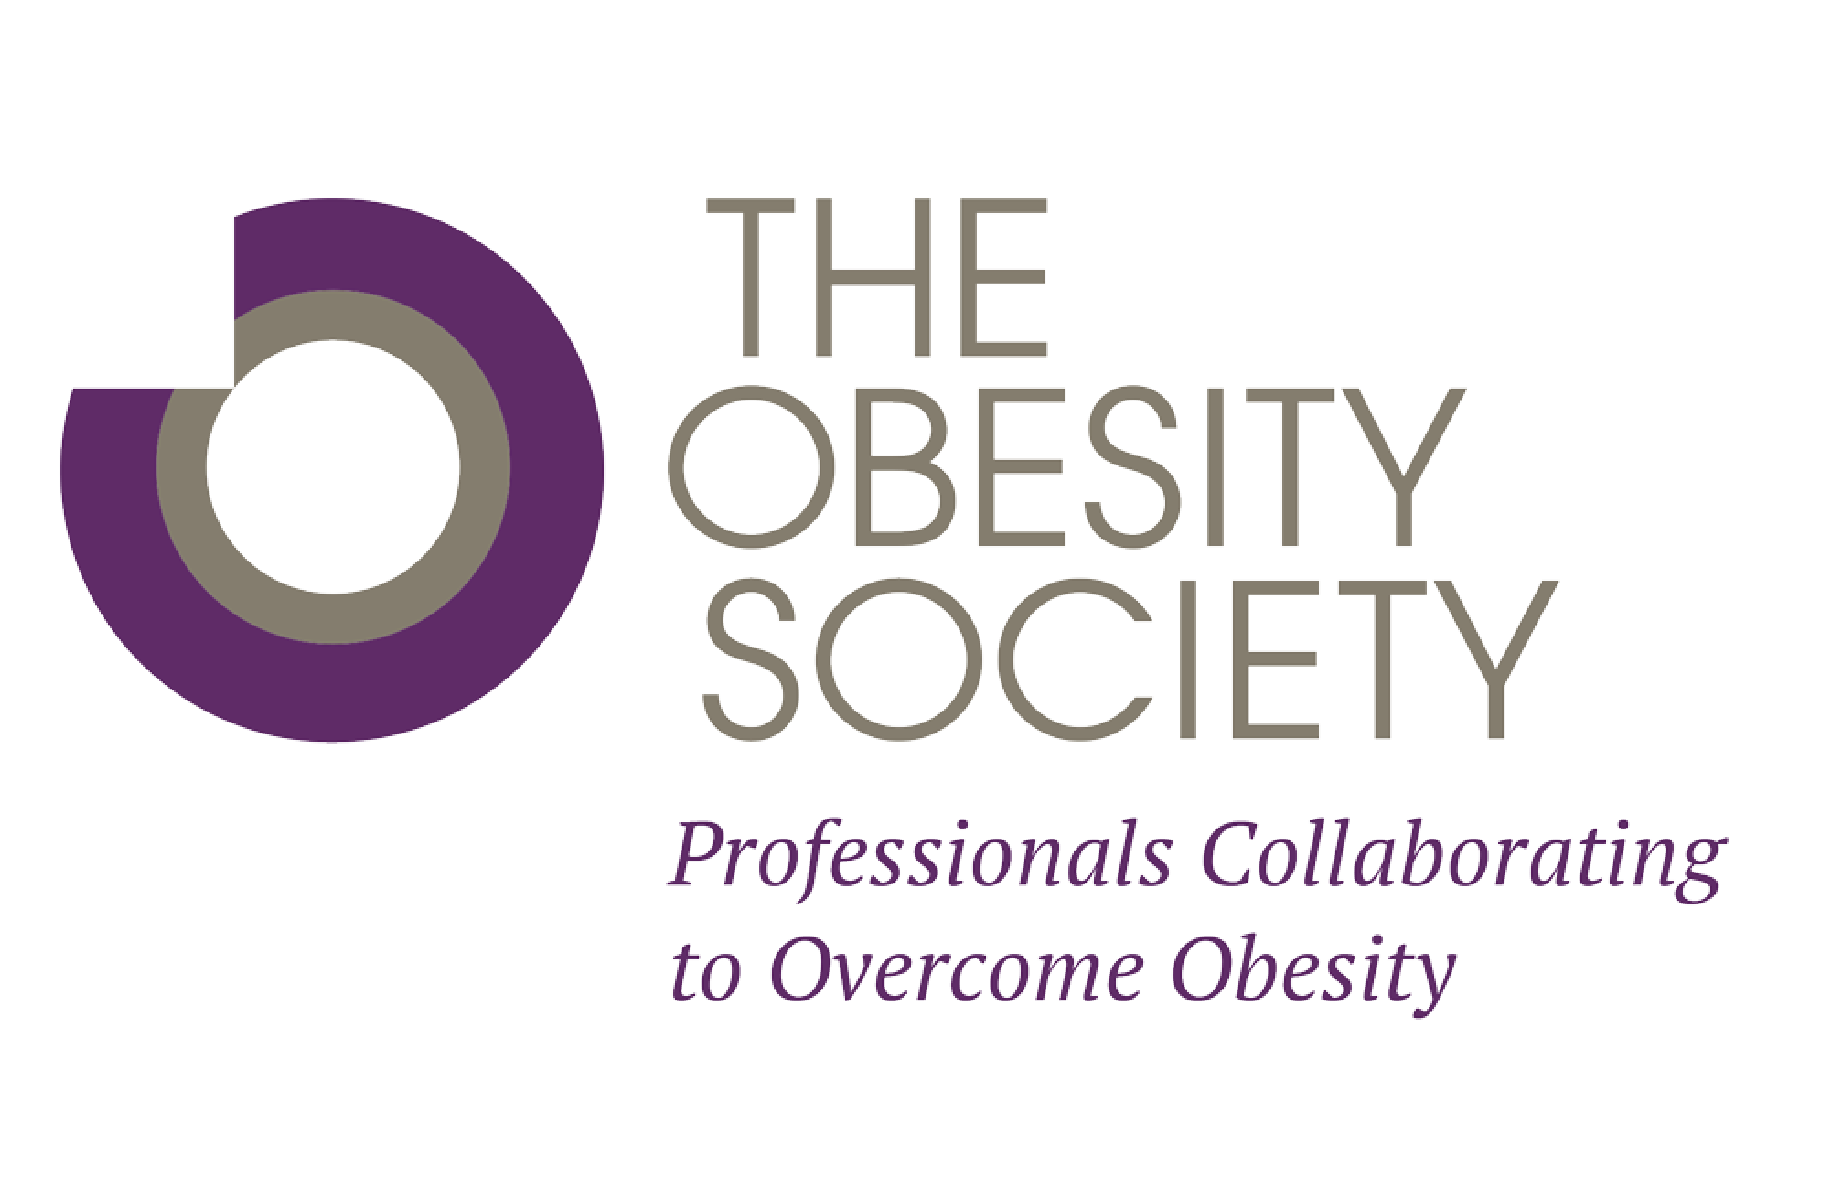 The Obesity Society (TOS)